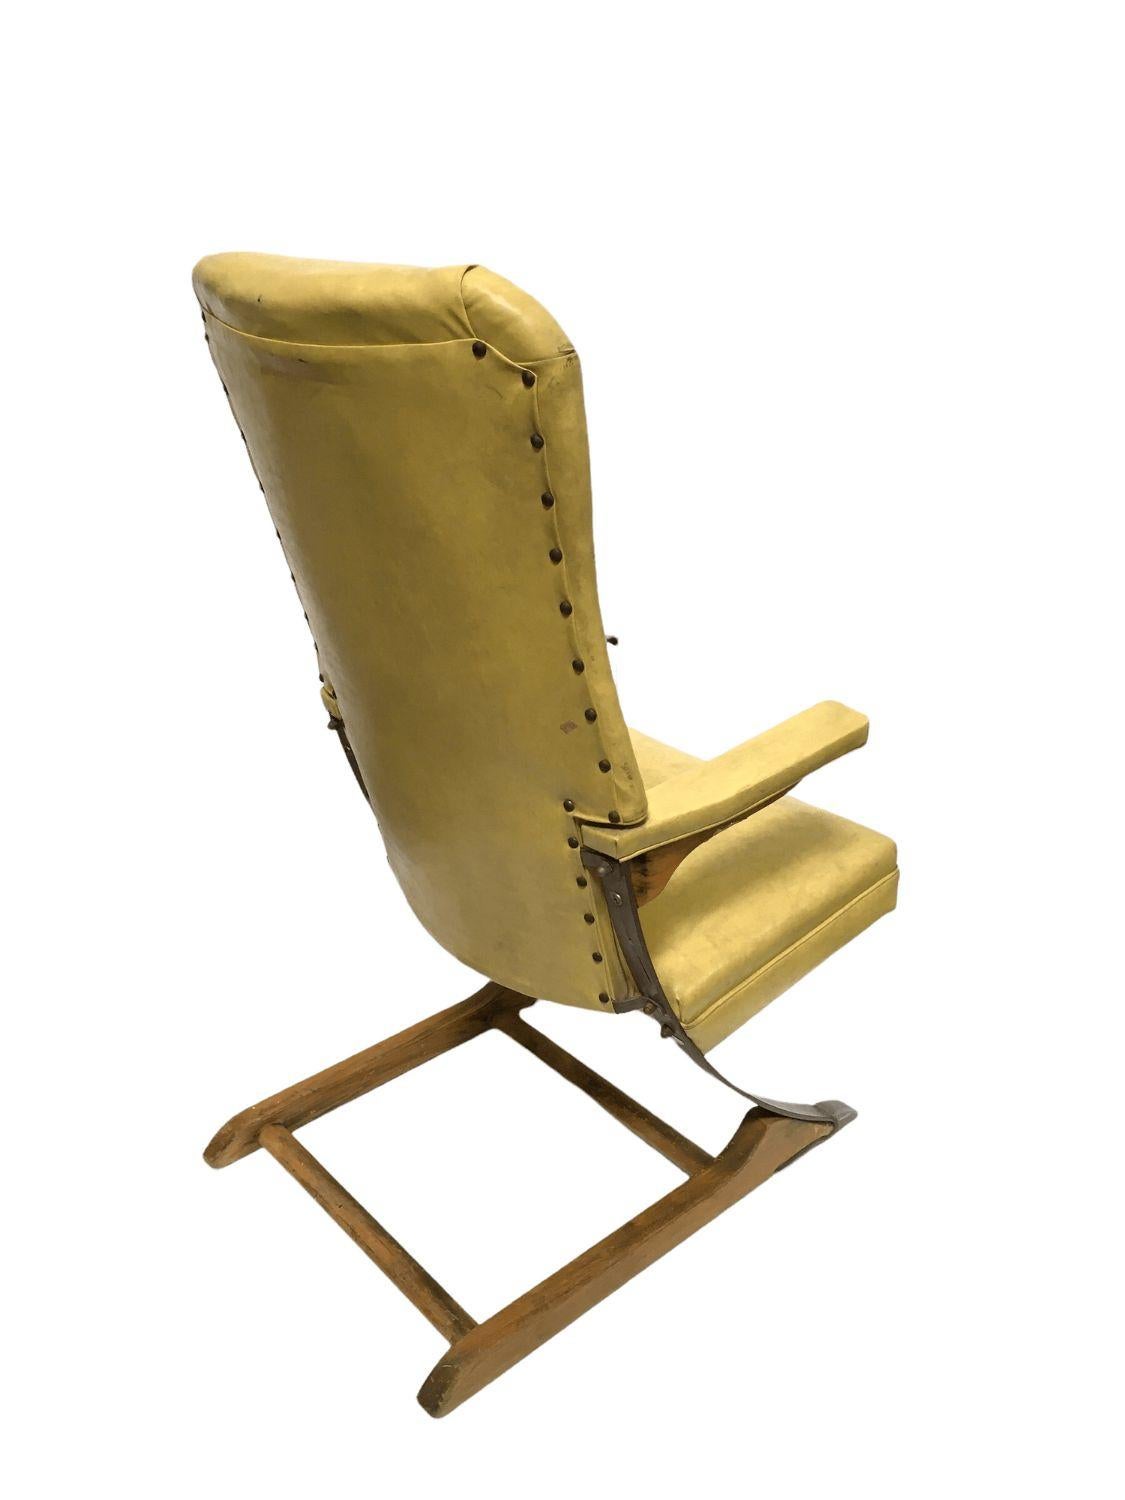 Metal Vintage Rock-a-Chair Cantilever Rocker Chair in Harvest Gold Vinyl For Sale